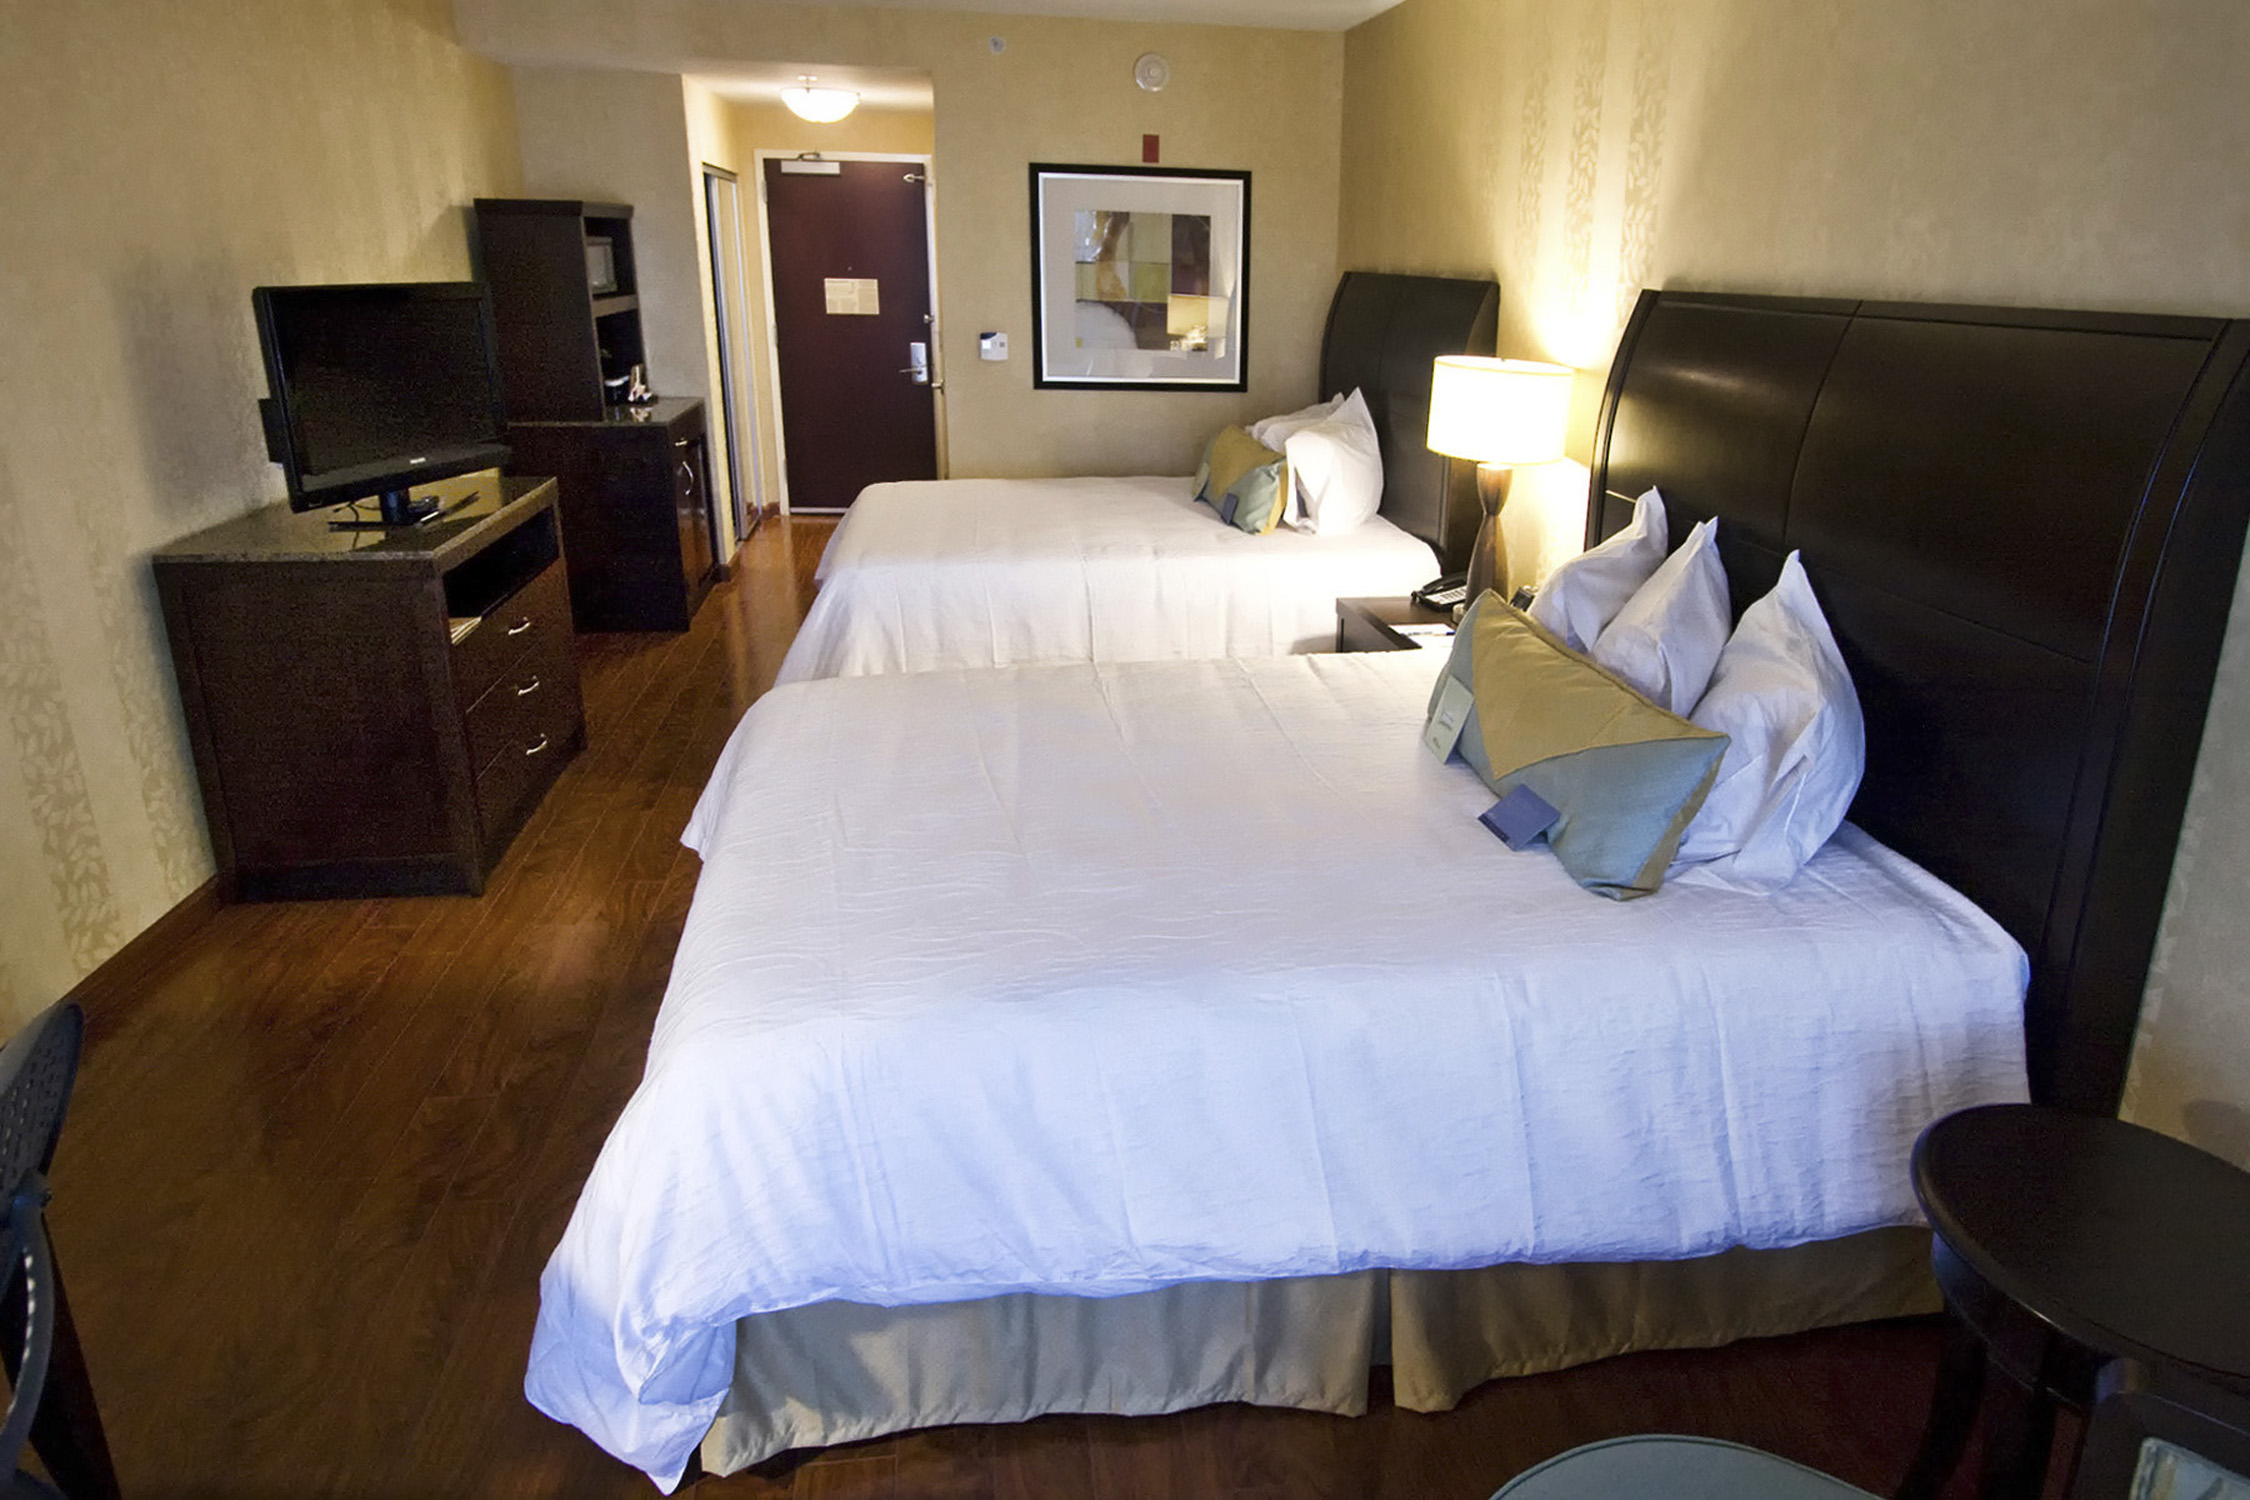 Guest Room with 2 Queen Beds